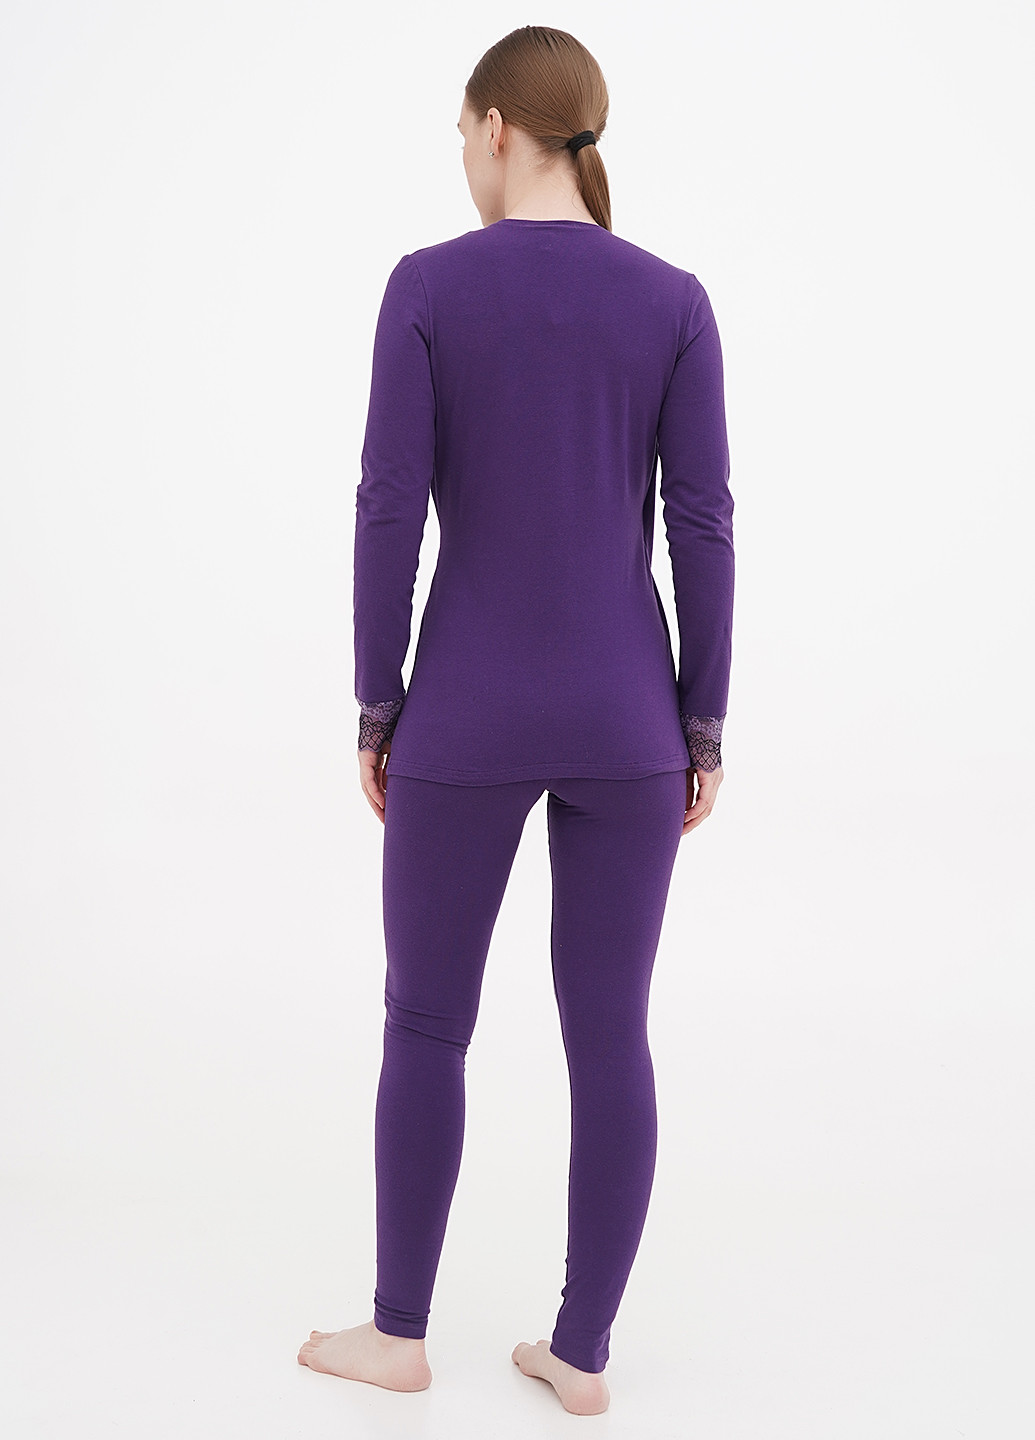 Пурпурная всесезон пижама (лонгслив, брюки) лонгслив + брюки Aniele